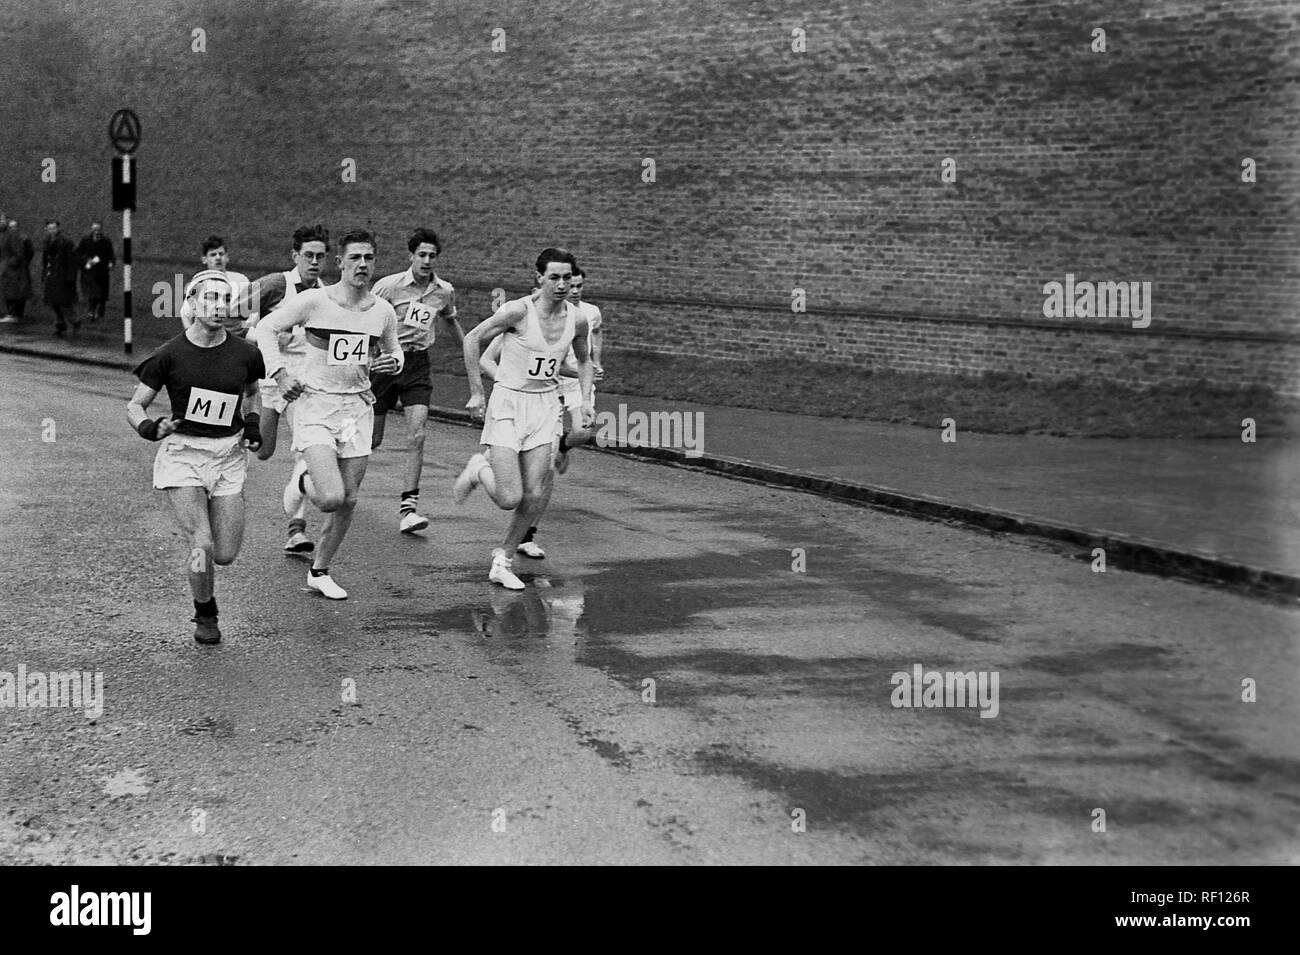 1950s Running Stock Photos & 1950s Running Stock Images - Alamy